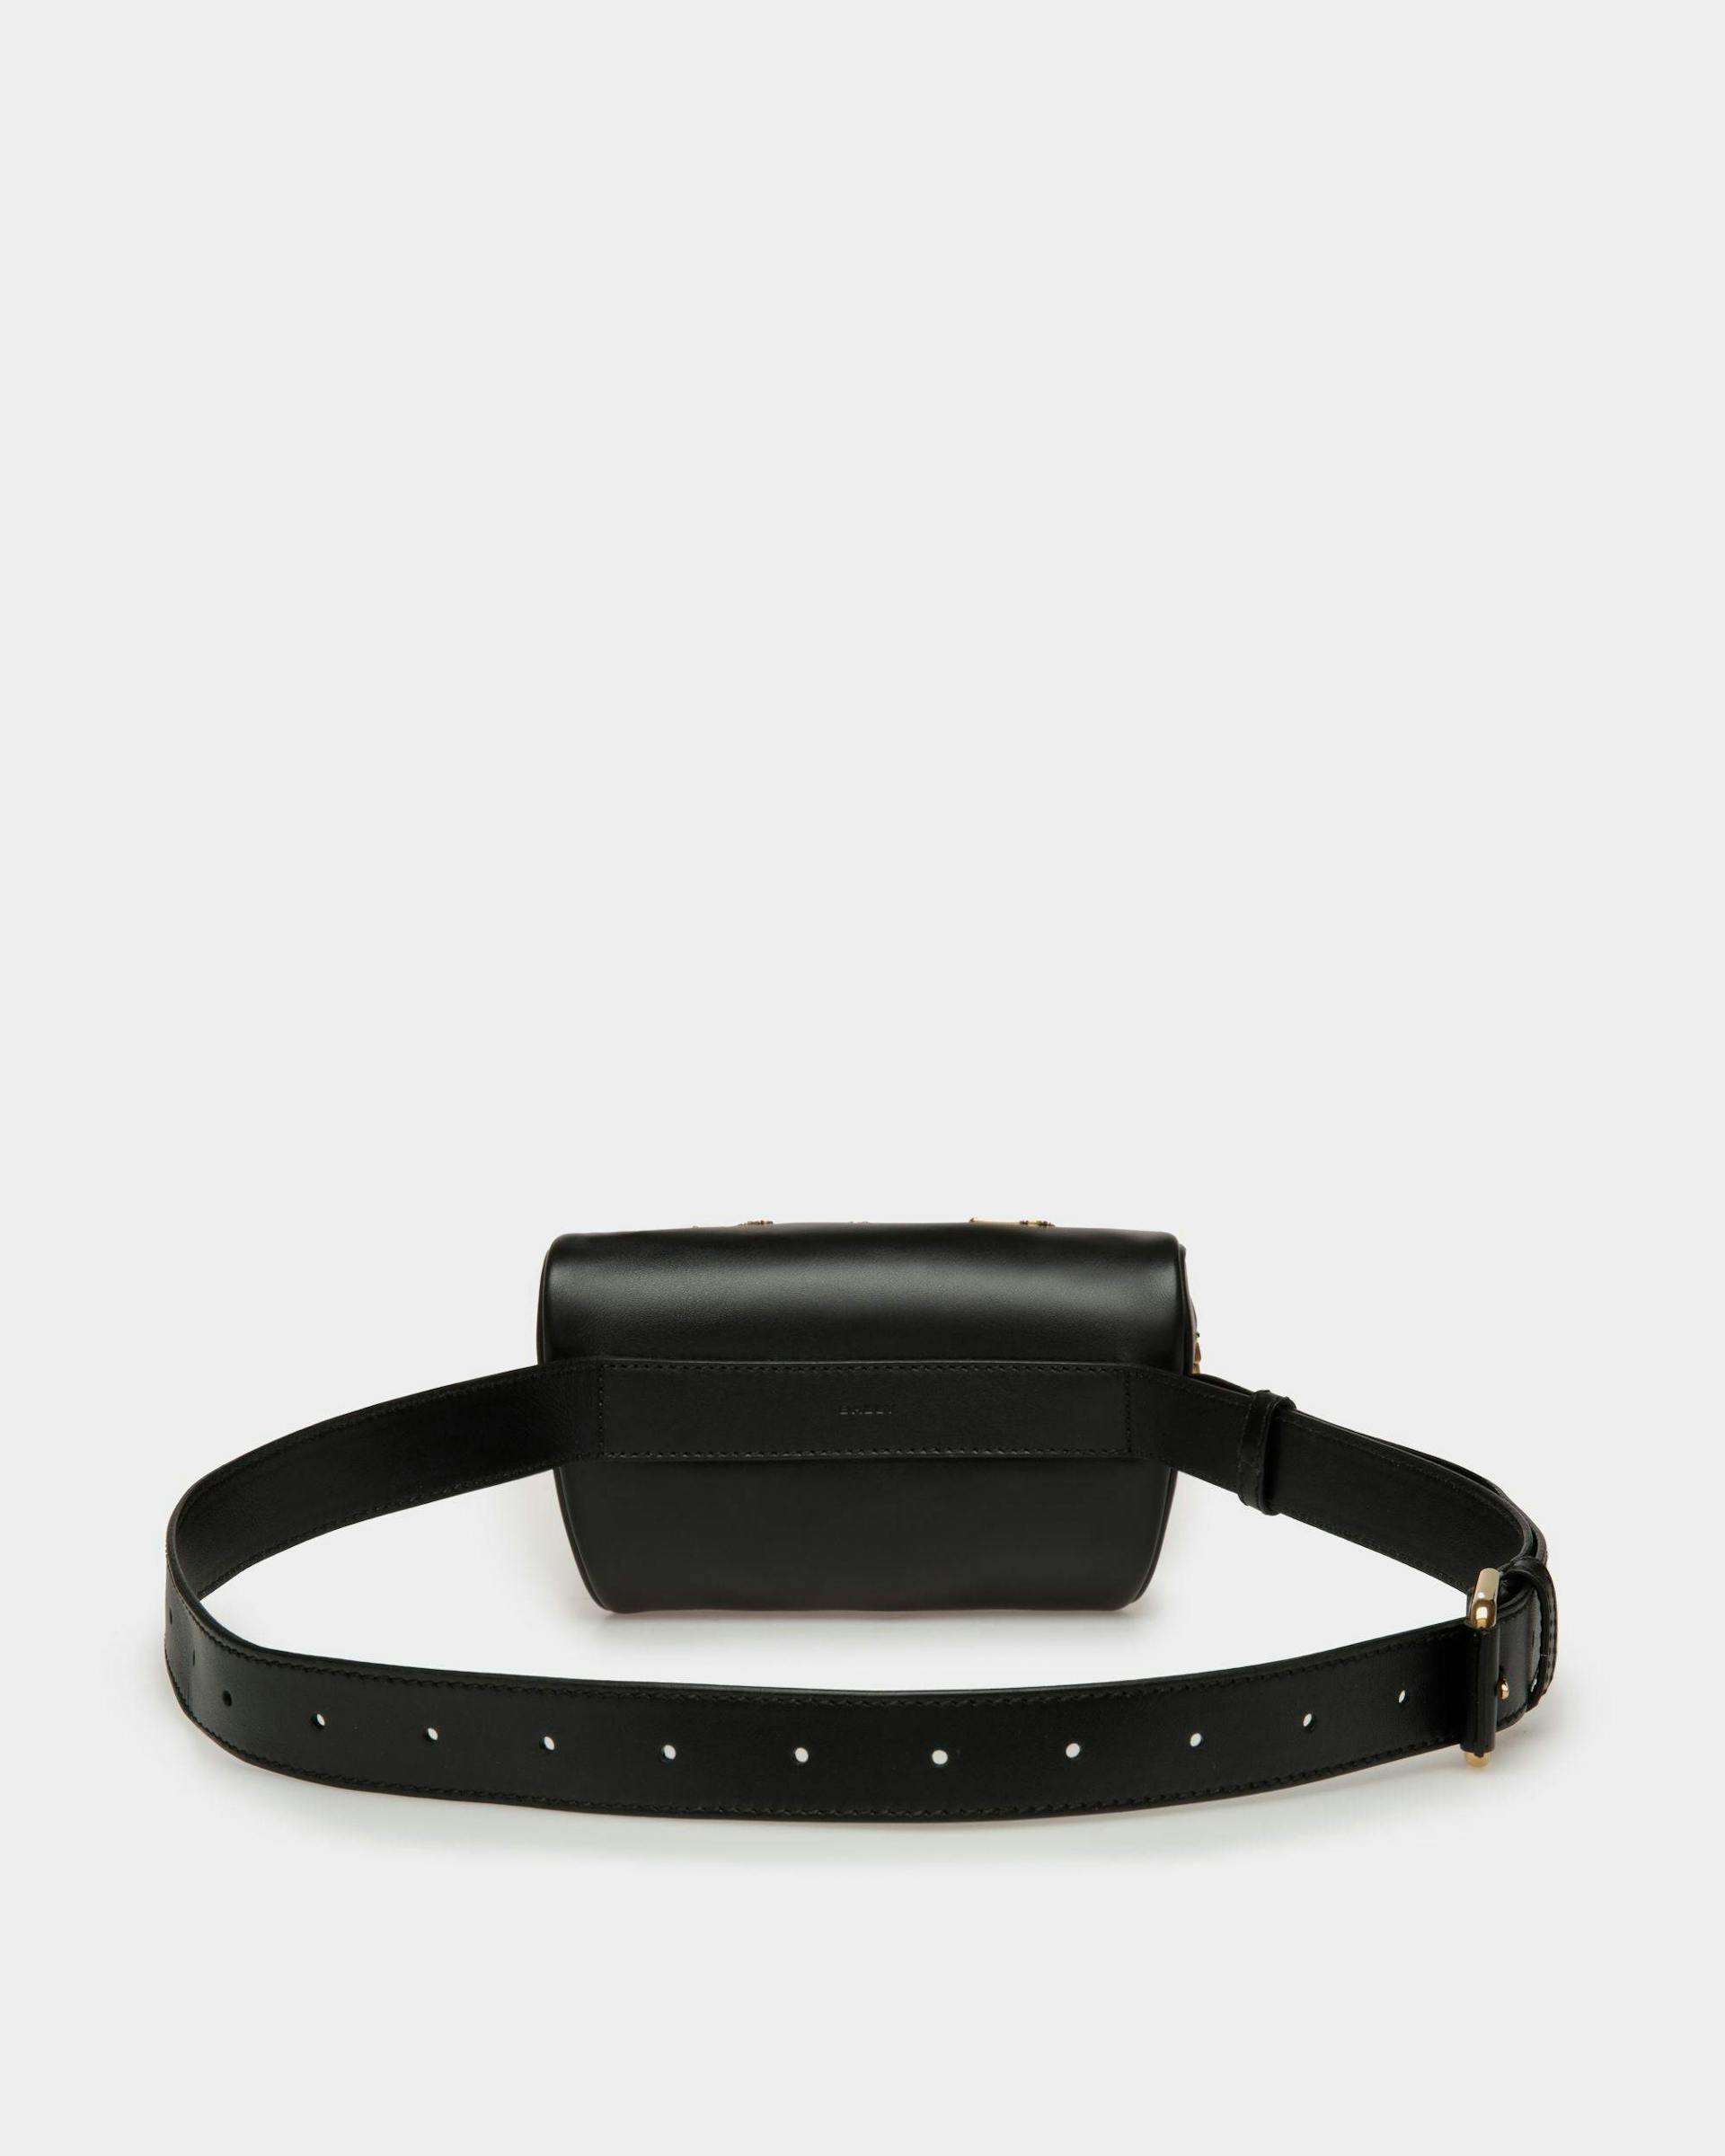 Women's Moutain Belt Bag  in Black Leather | Bally | Still Life Back